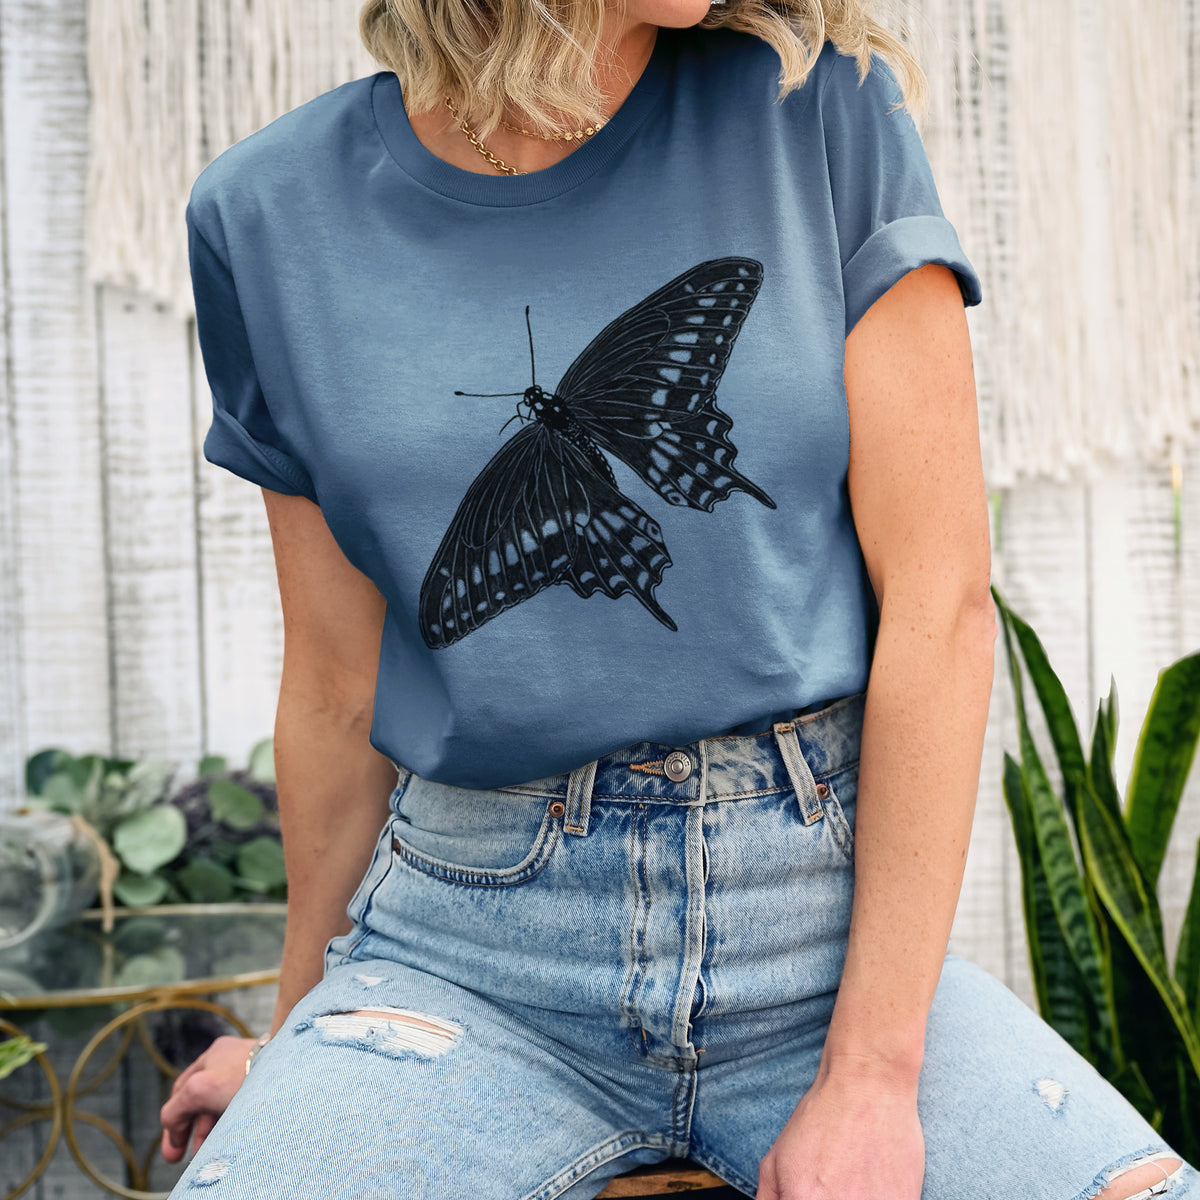 Black Swallowtail Butterfly - Papilio polyxenes - Lightweight 100% Cotton Unisex Crewneck